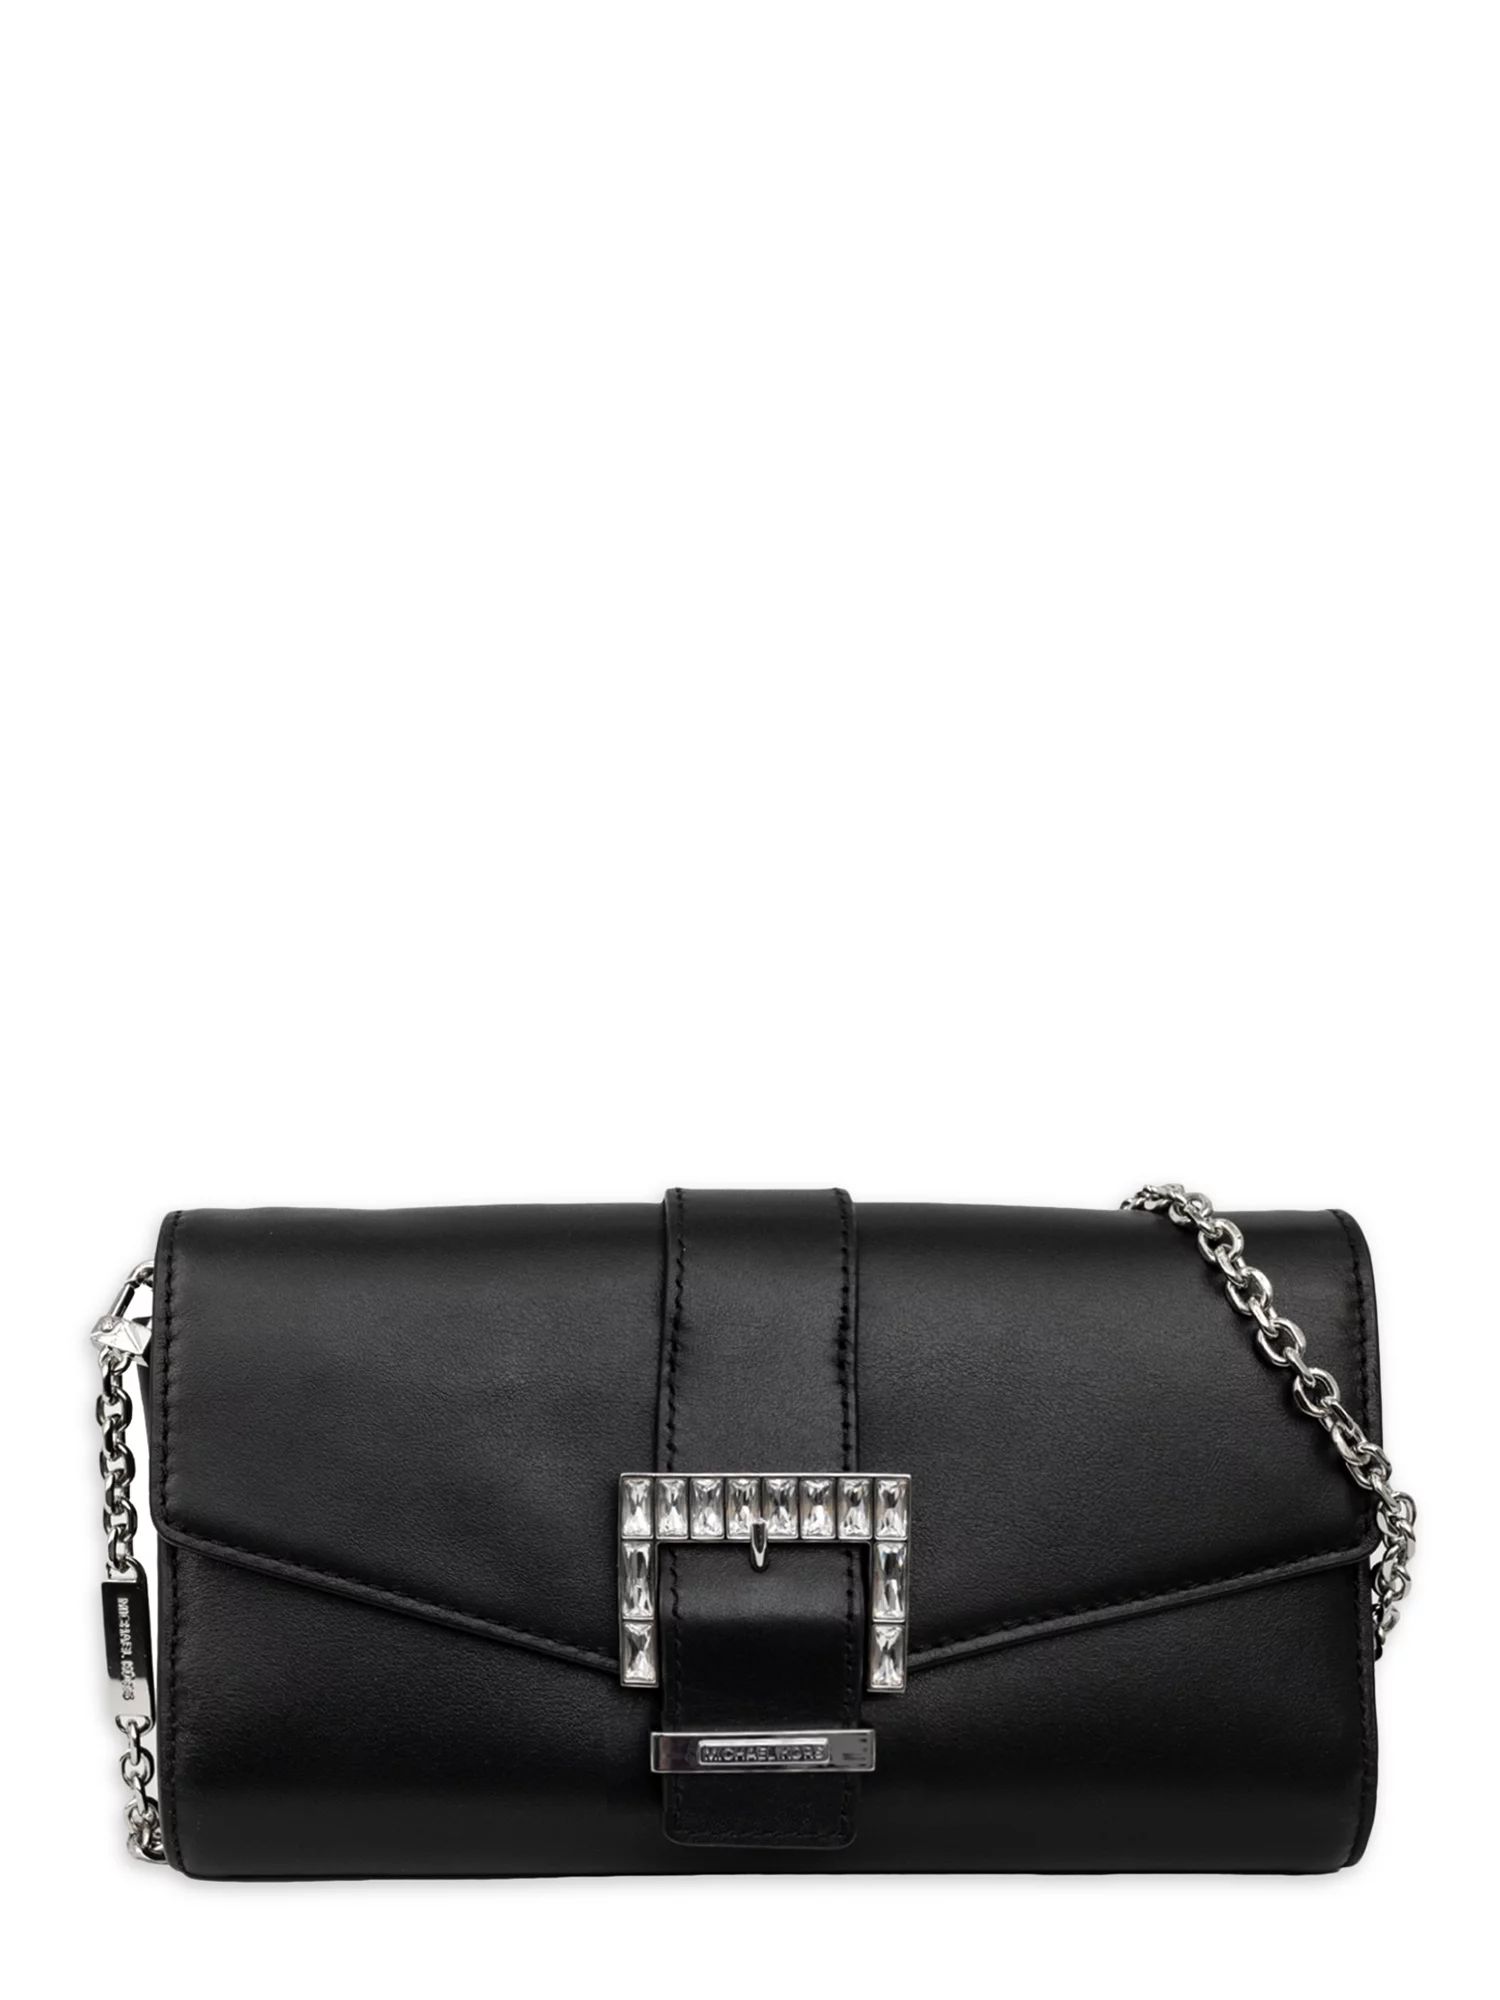 Michael Kors Women's Penelope Medium Leather Clutch - Black | Walmart (US)